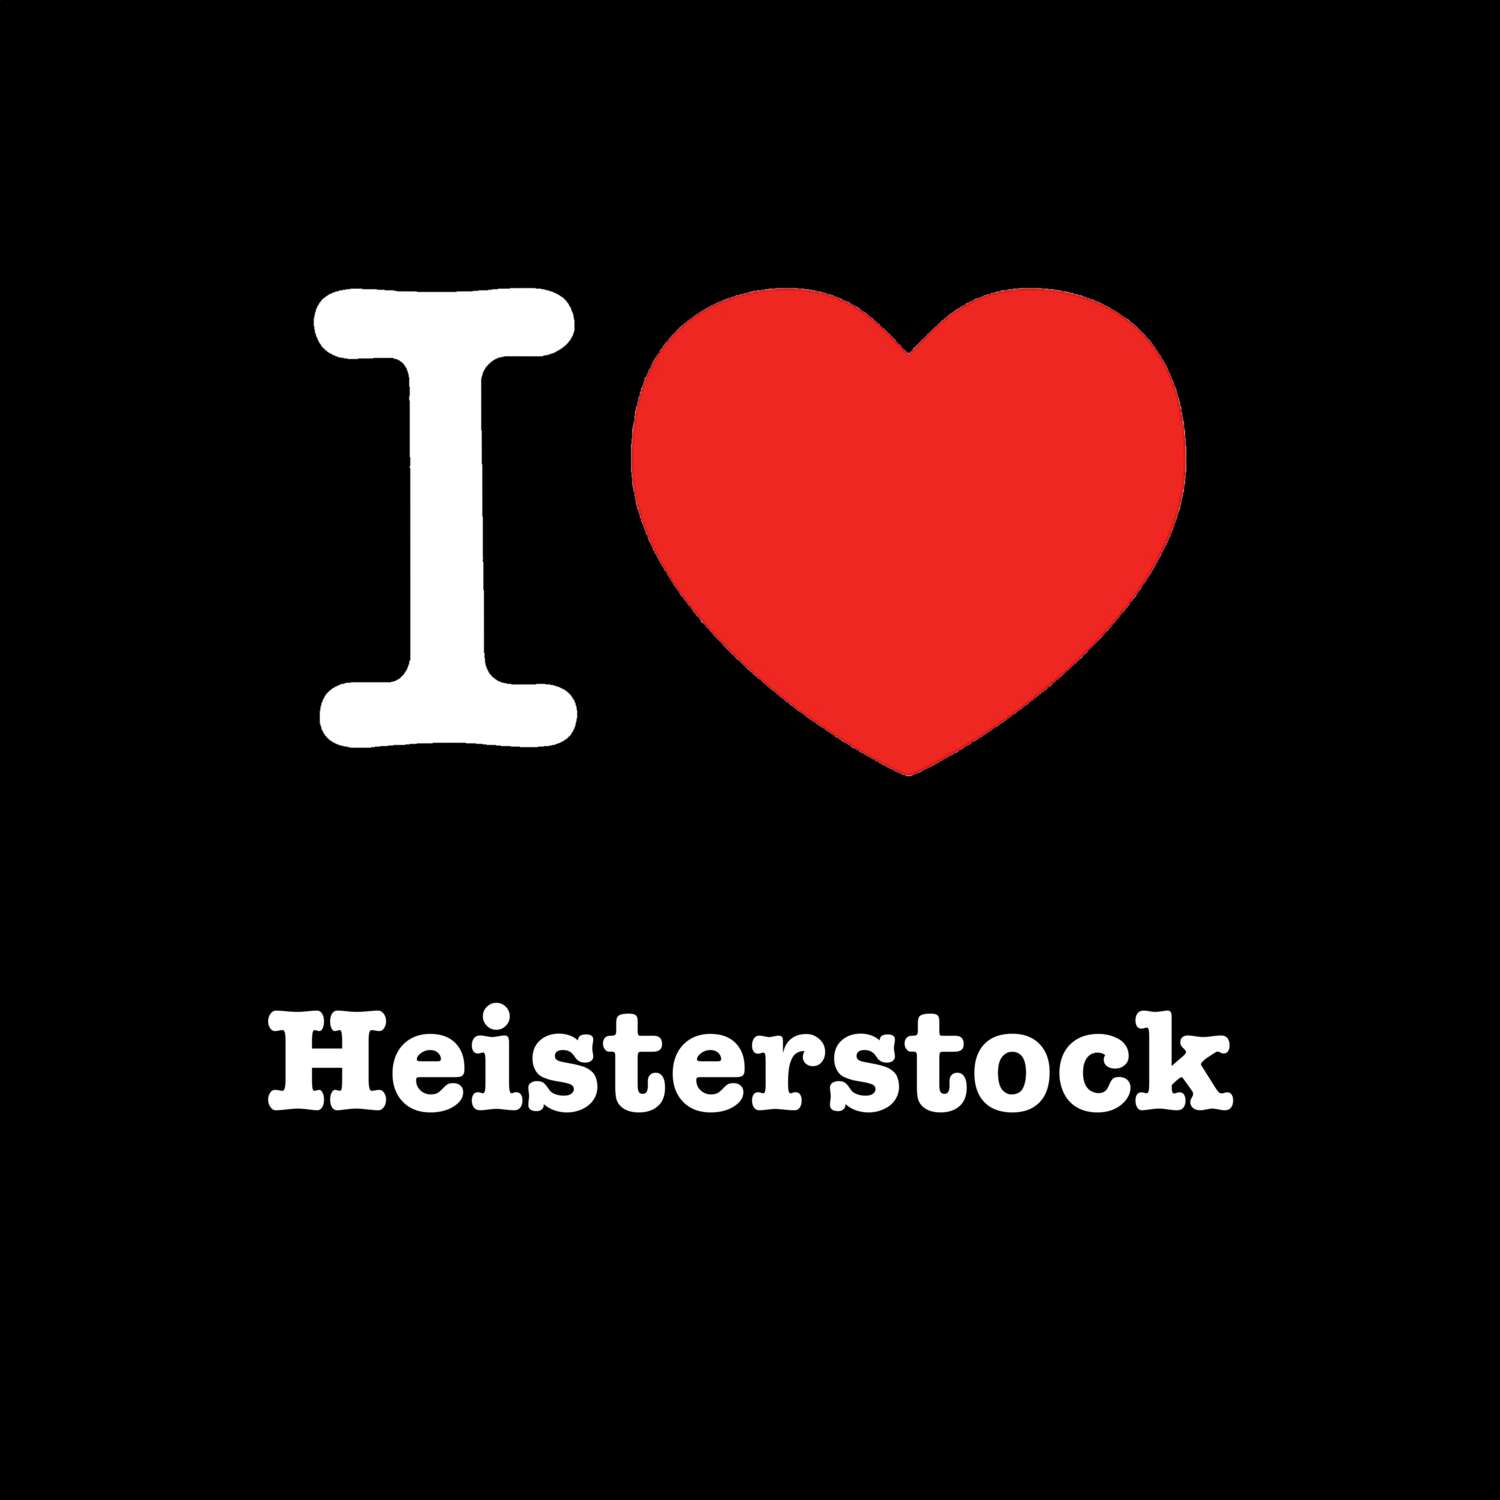 Heisterstock T-Shirt »I love«